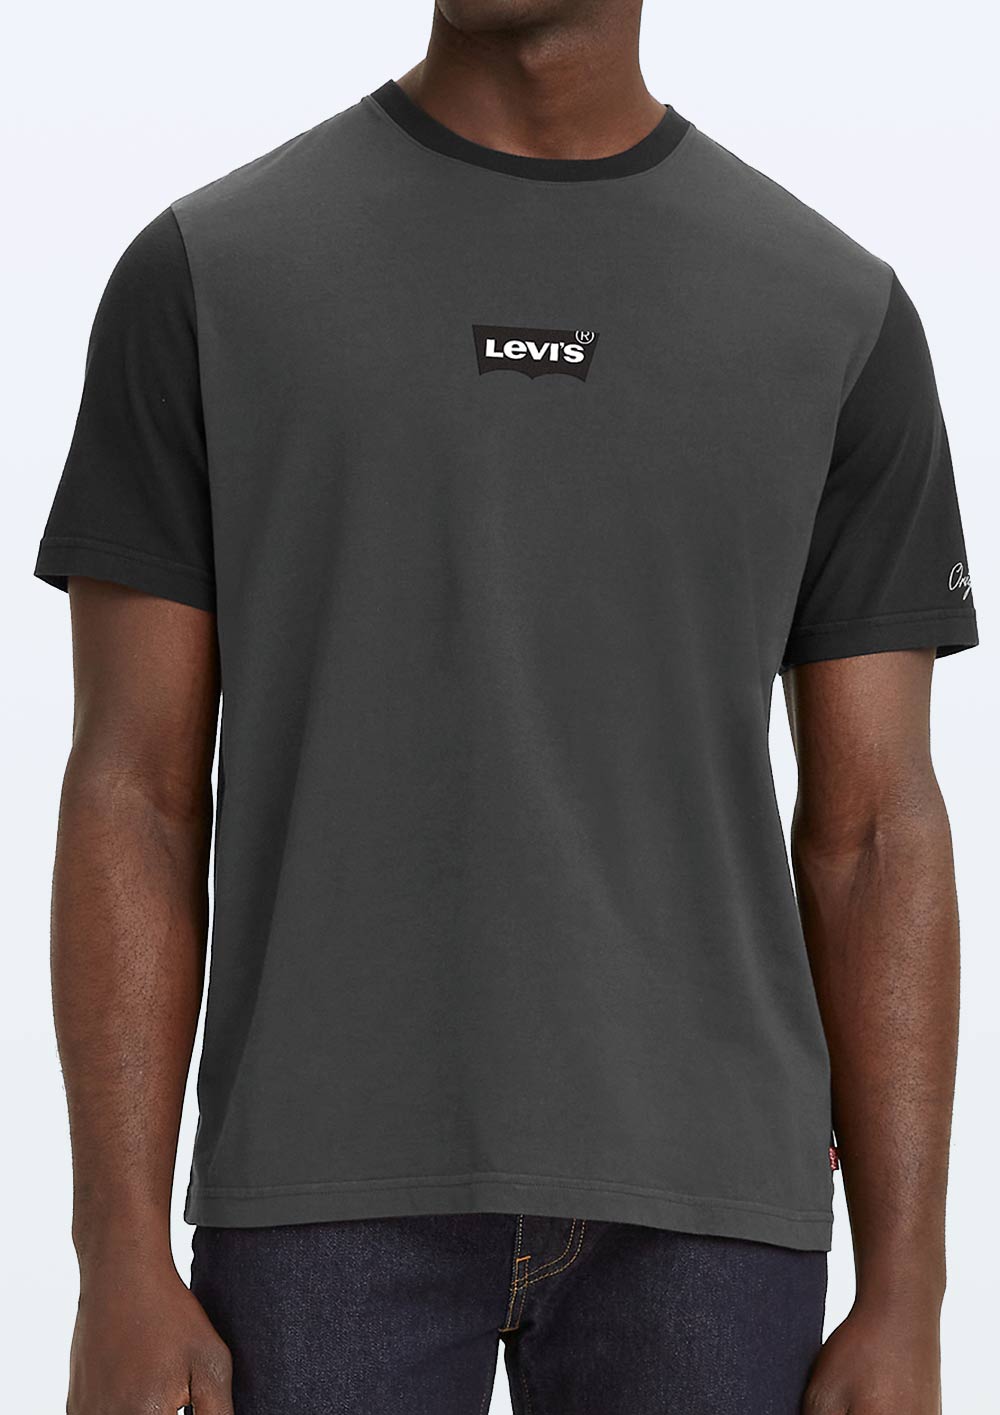 Levis x FCSP T-shirt gray-black